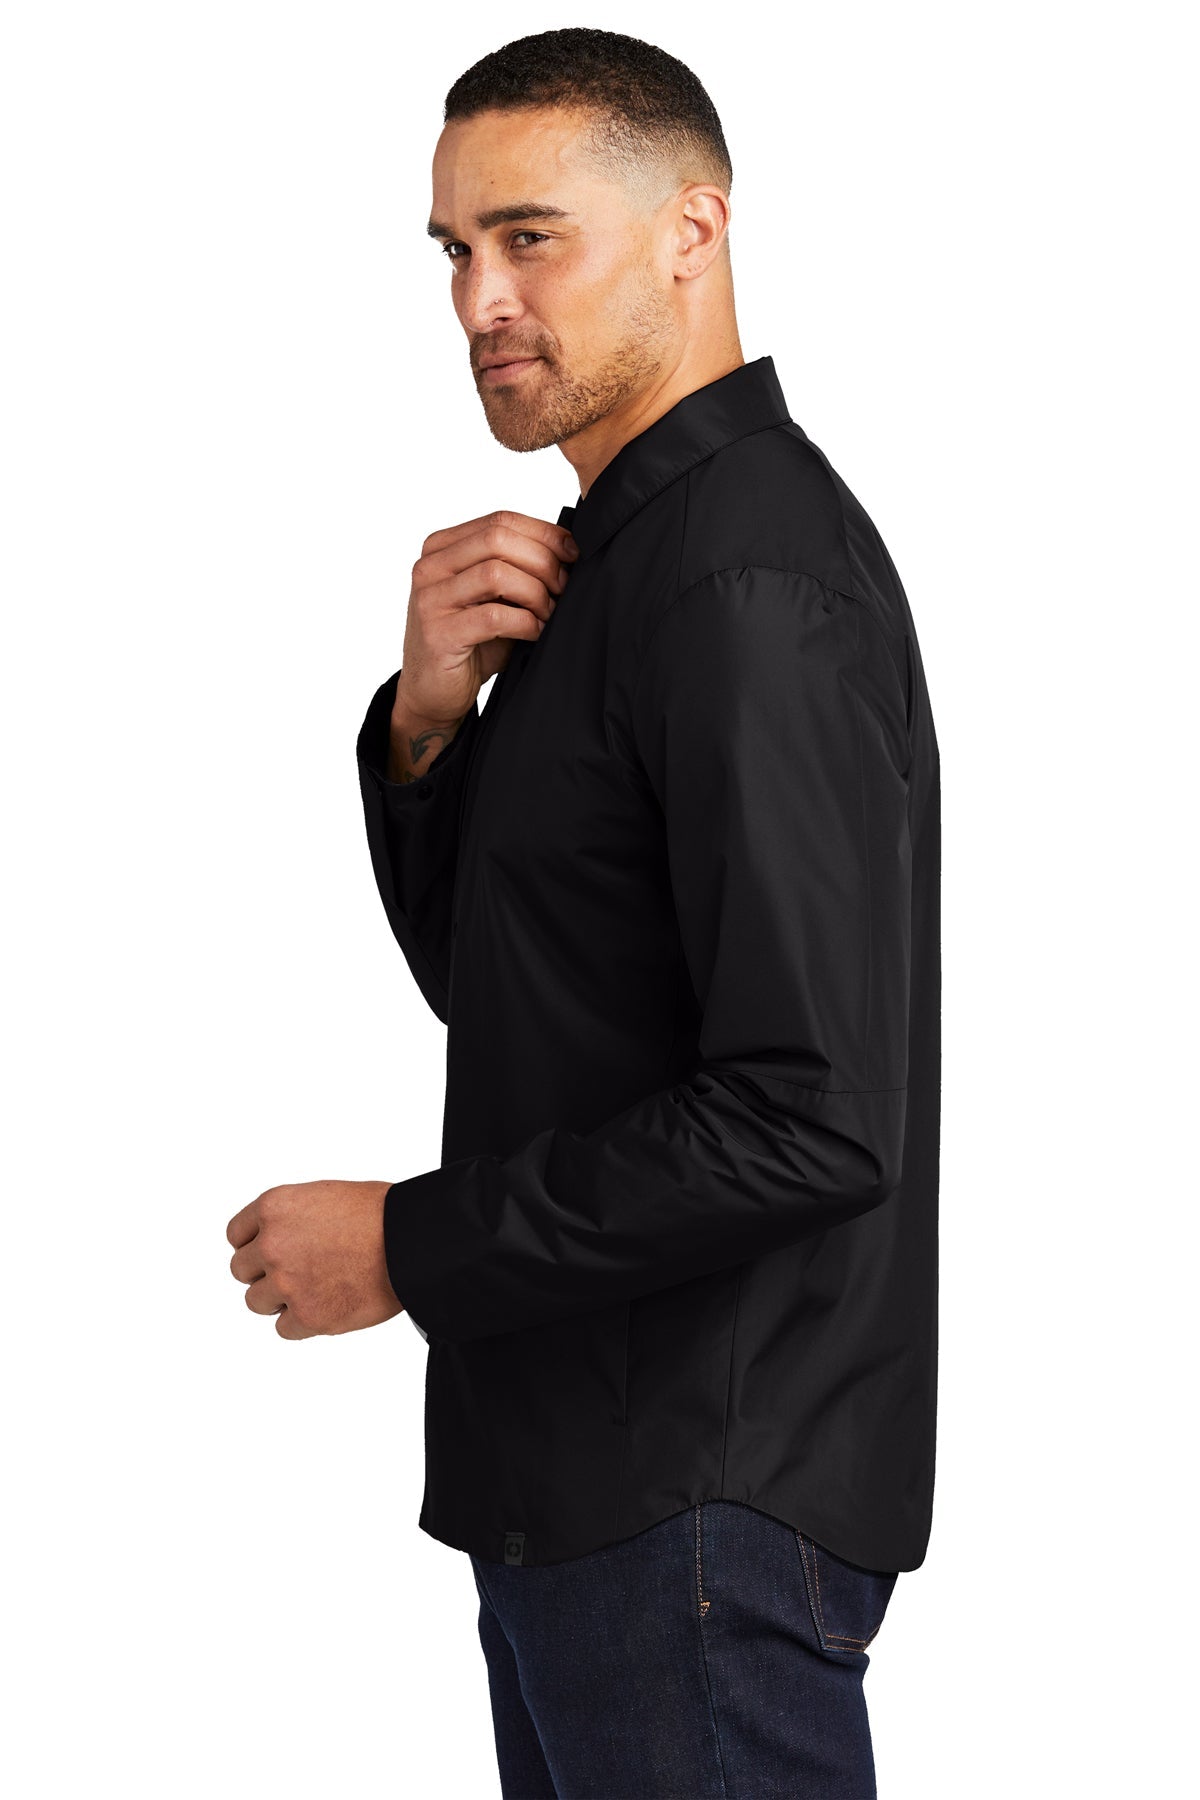 OGIO Reverse Customized Shirt Jackets, Blacktop